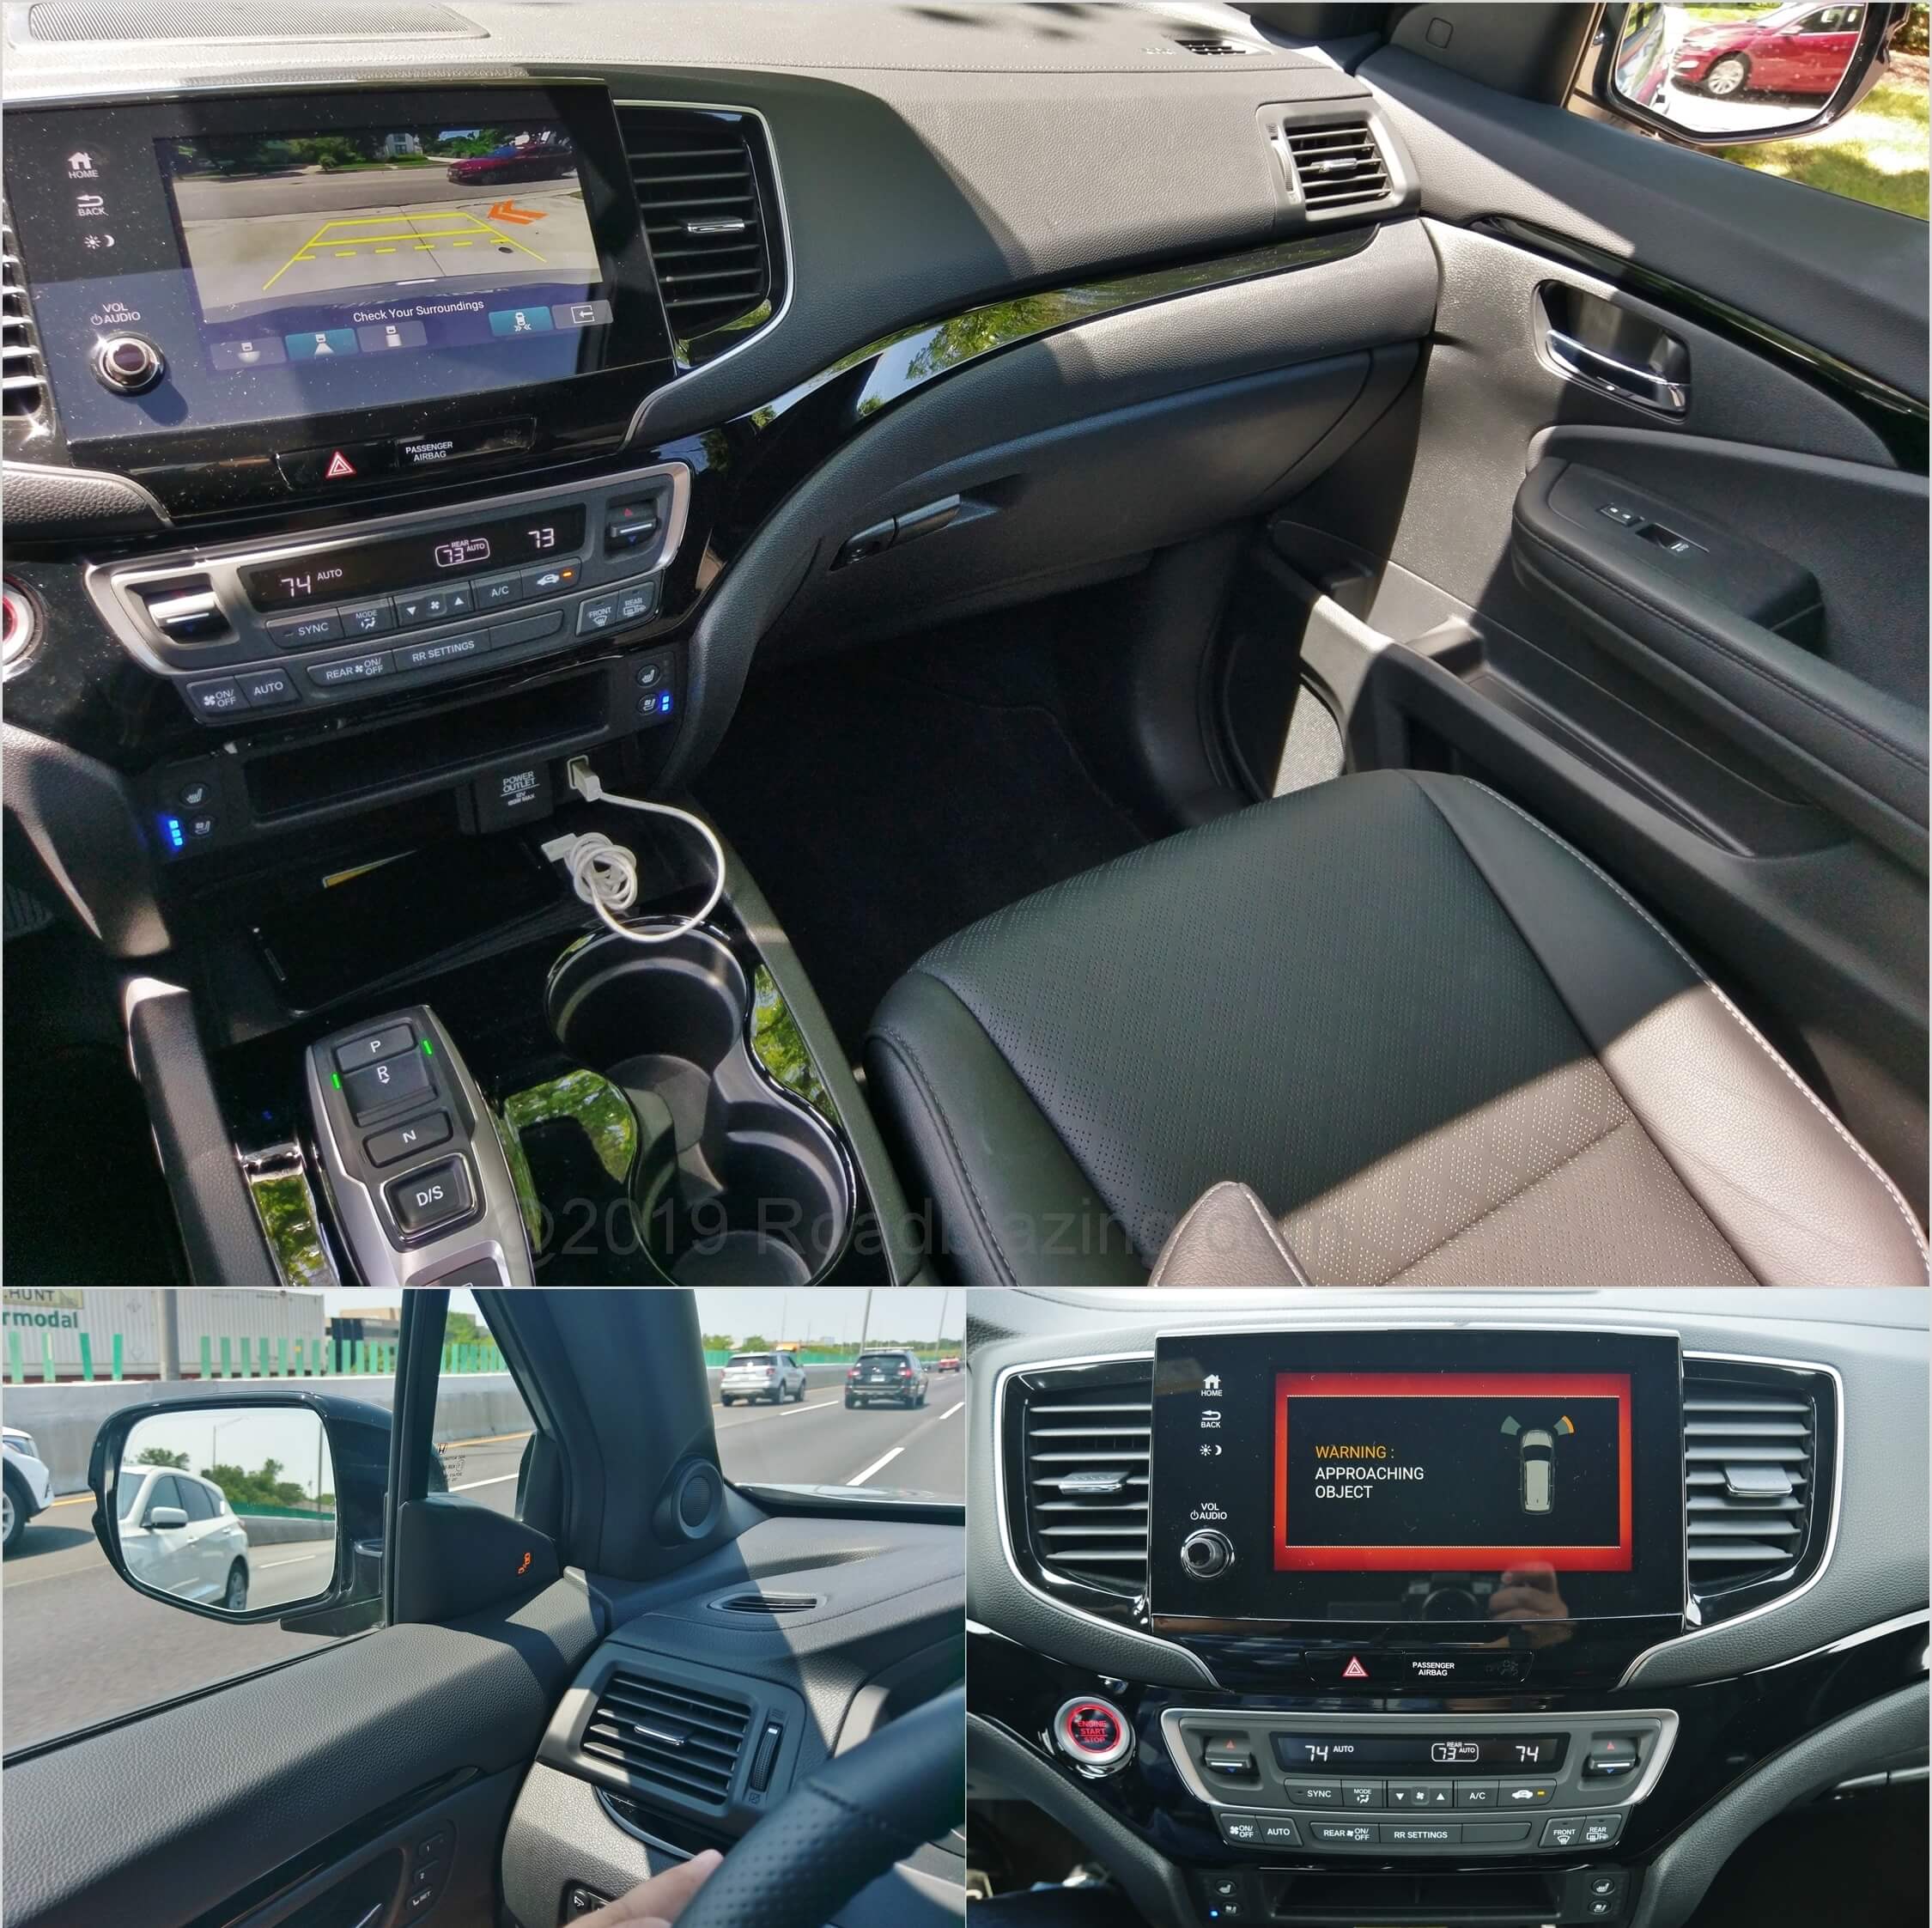 2019 Honda Passport Elite AWD: Standard HondaSafetySense rear camera, sonar perimeter park assist, blind spot warning (available)